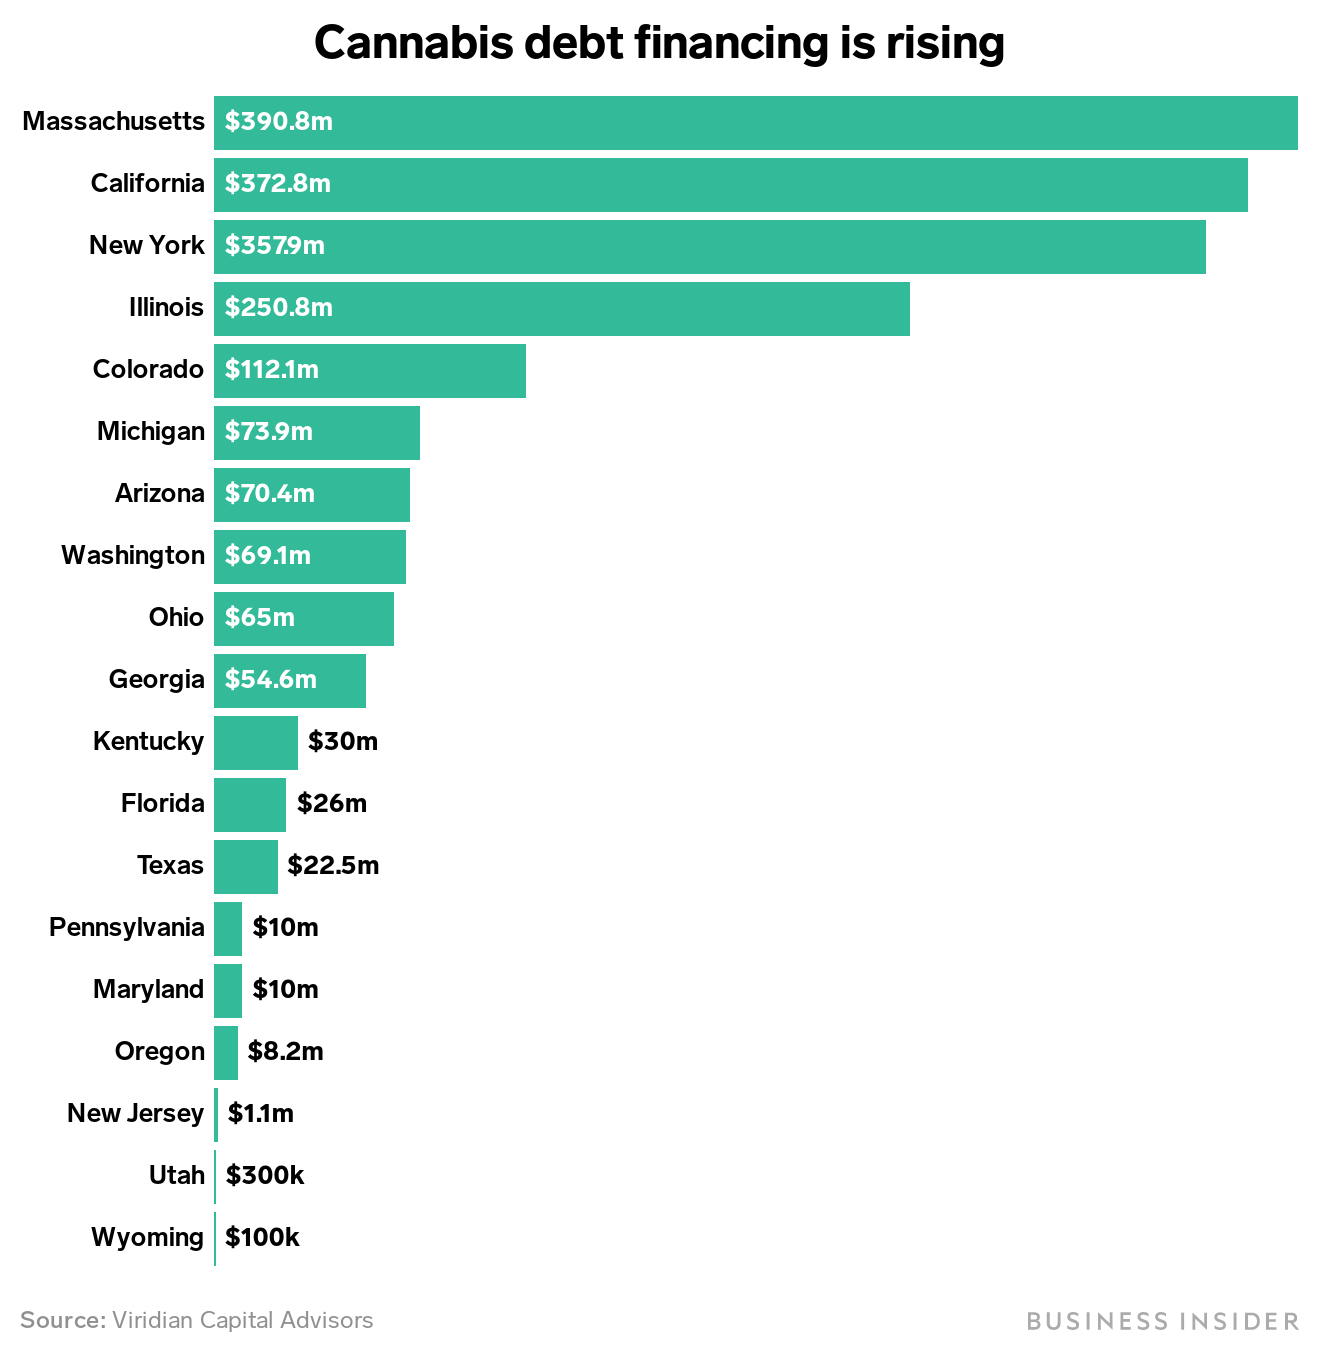 Cannabis debt financing is rising